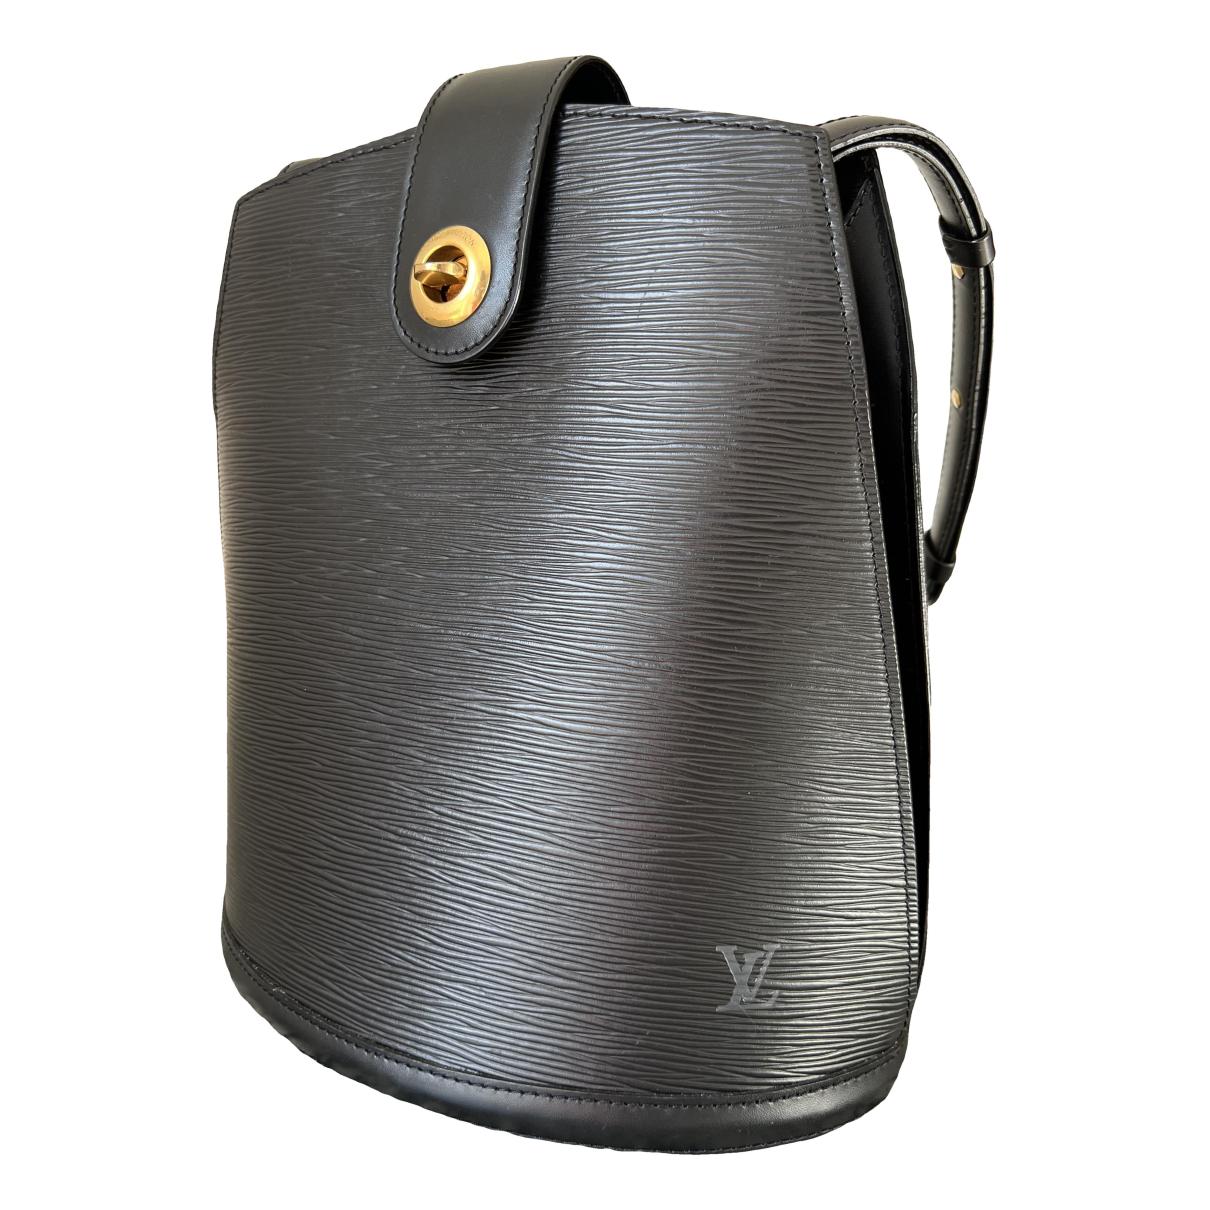 Sac Louis Vuitton Verseau en Cuir Epi Noir - Dealicash